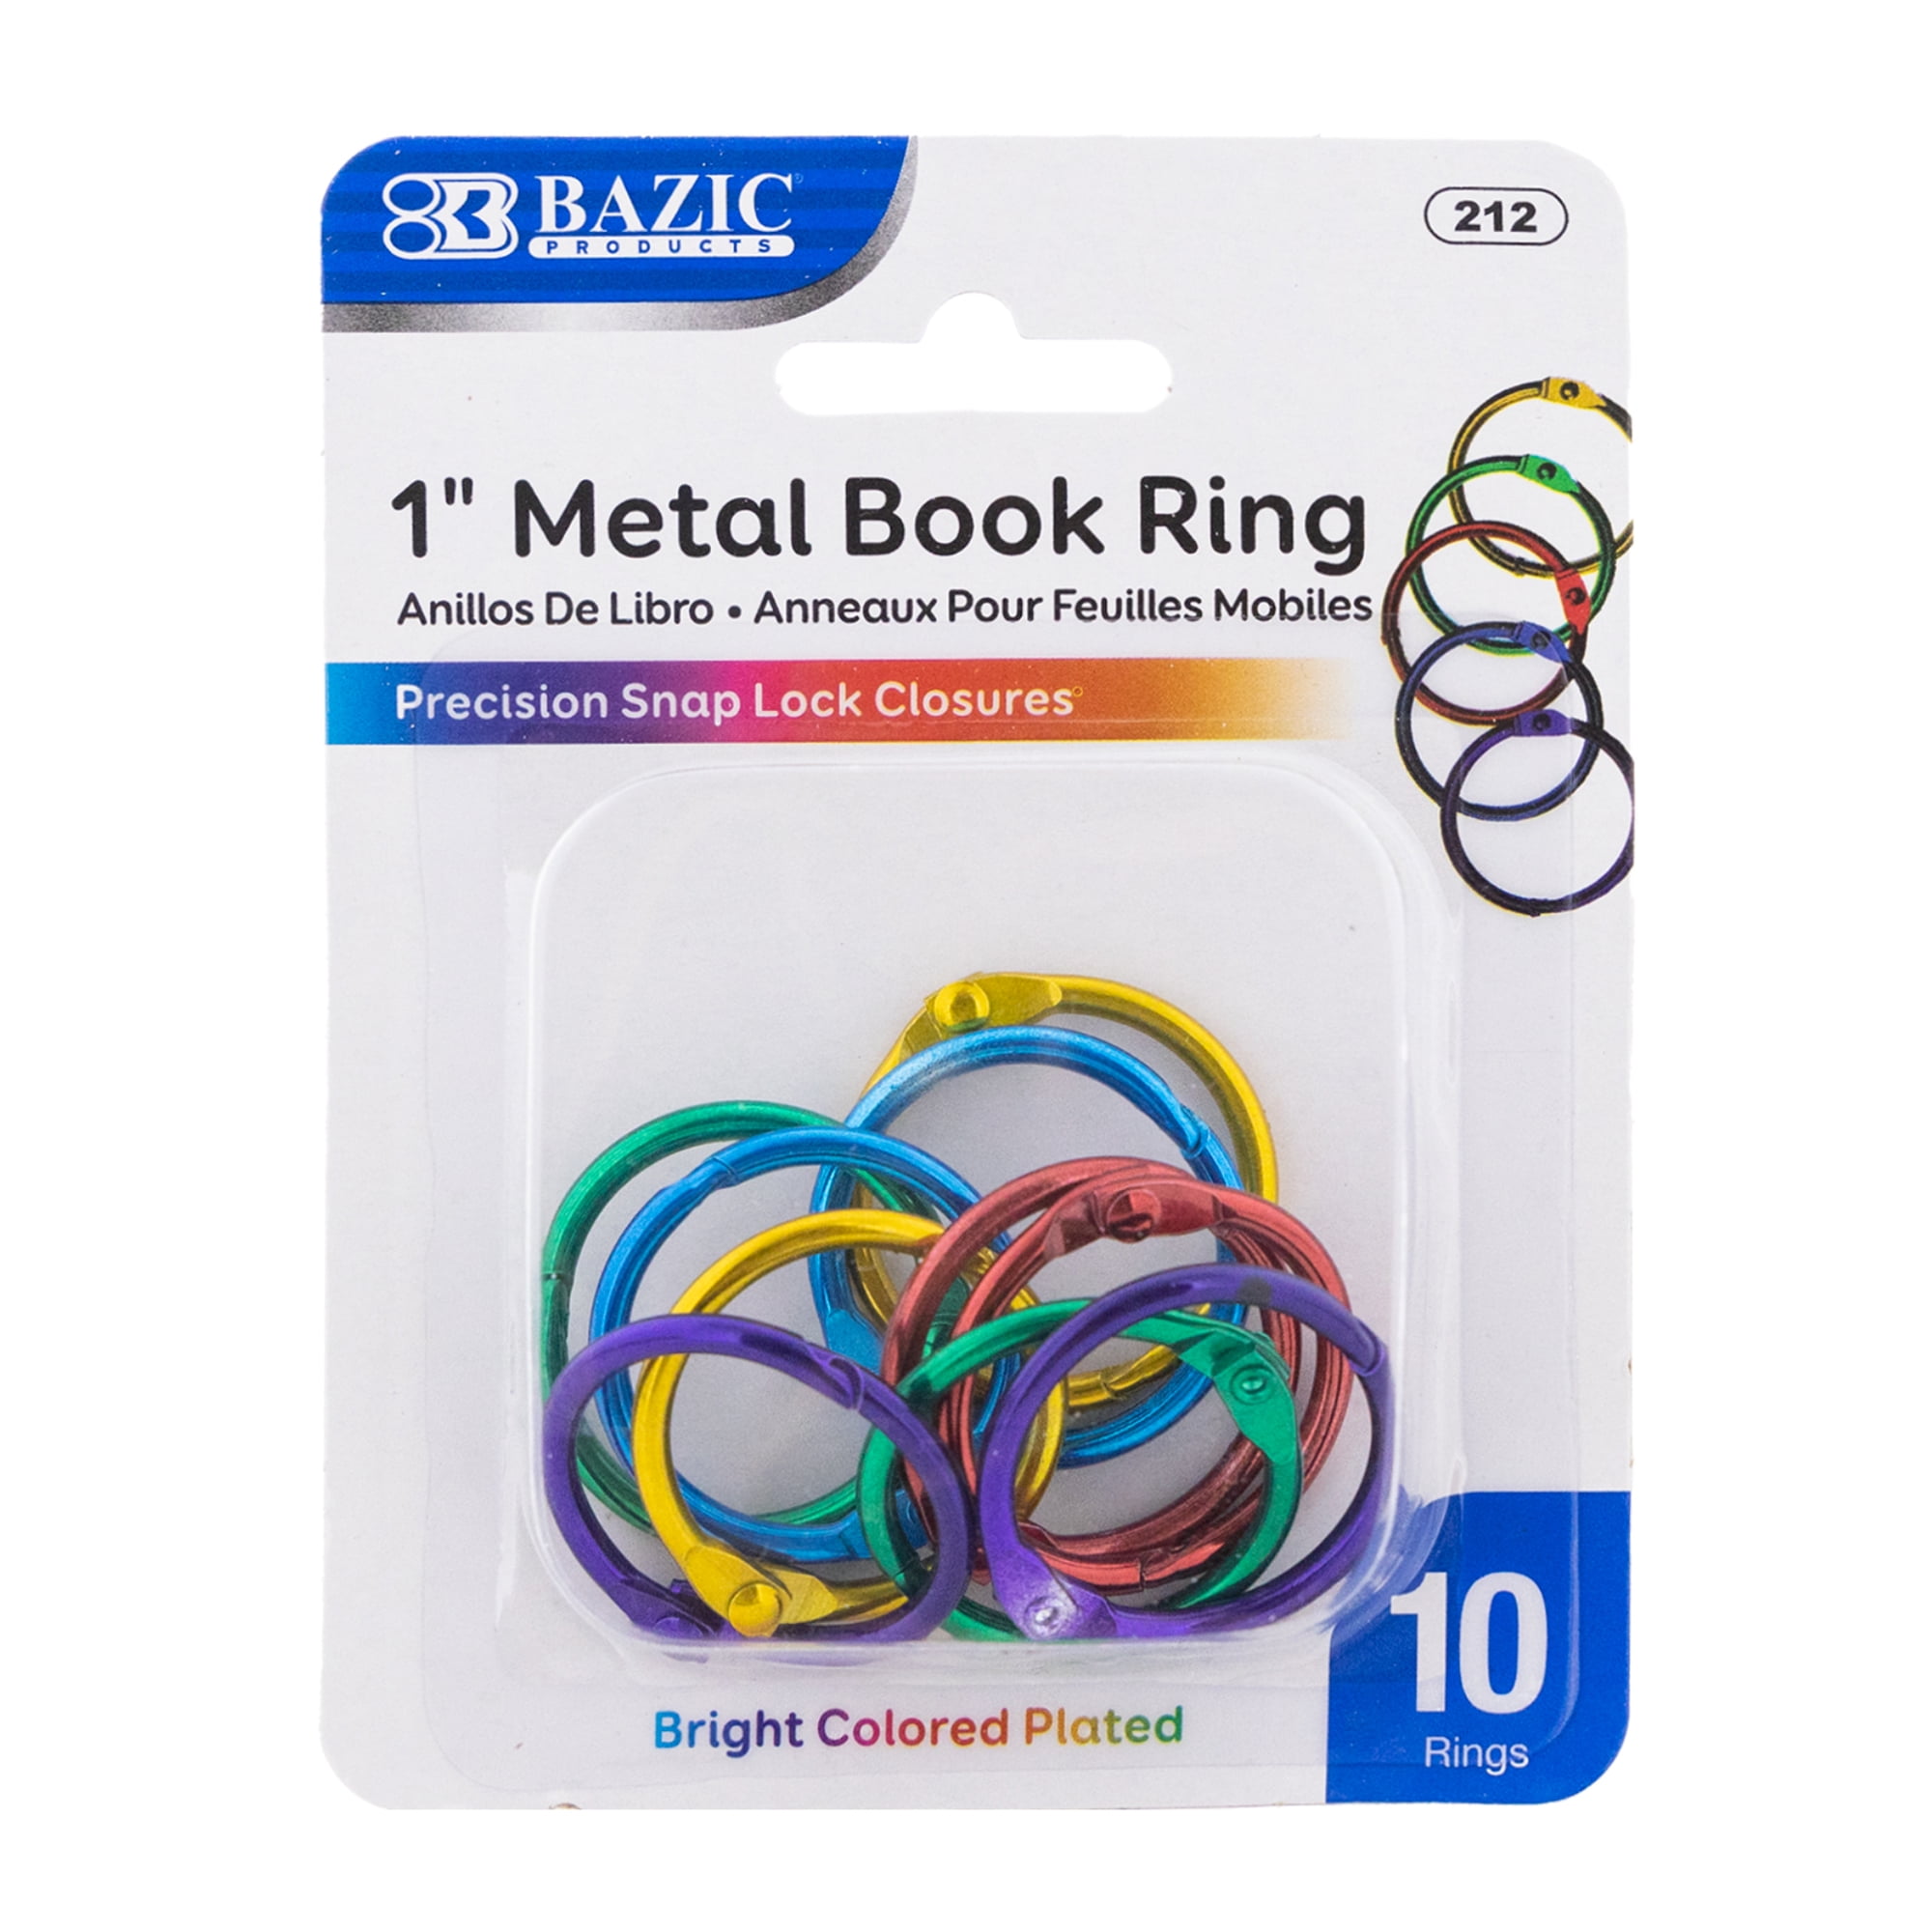 Avery Magnetic Hanging Binder Rings 1 12 Ring - Office Depot